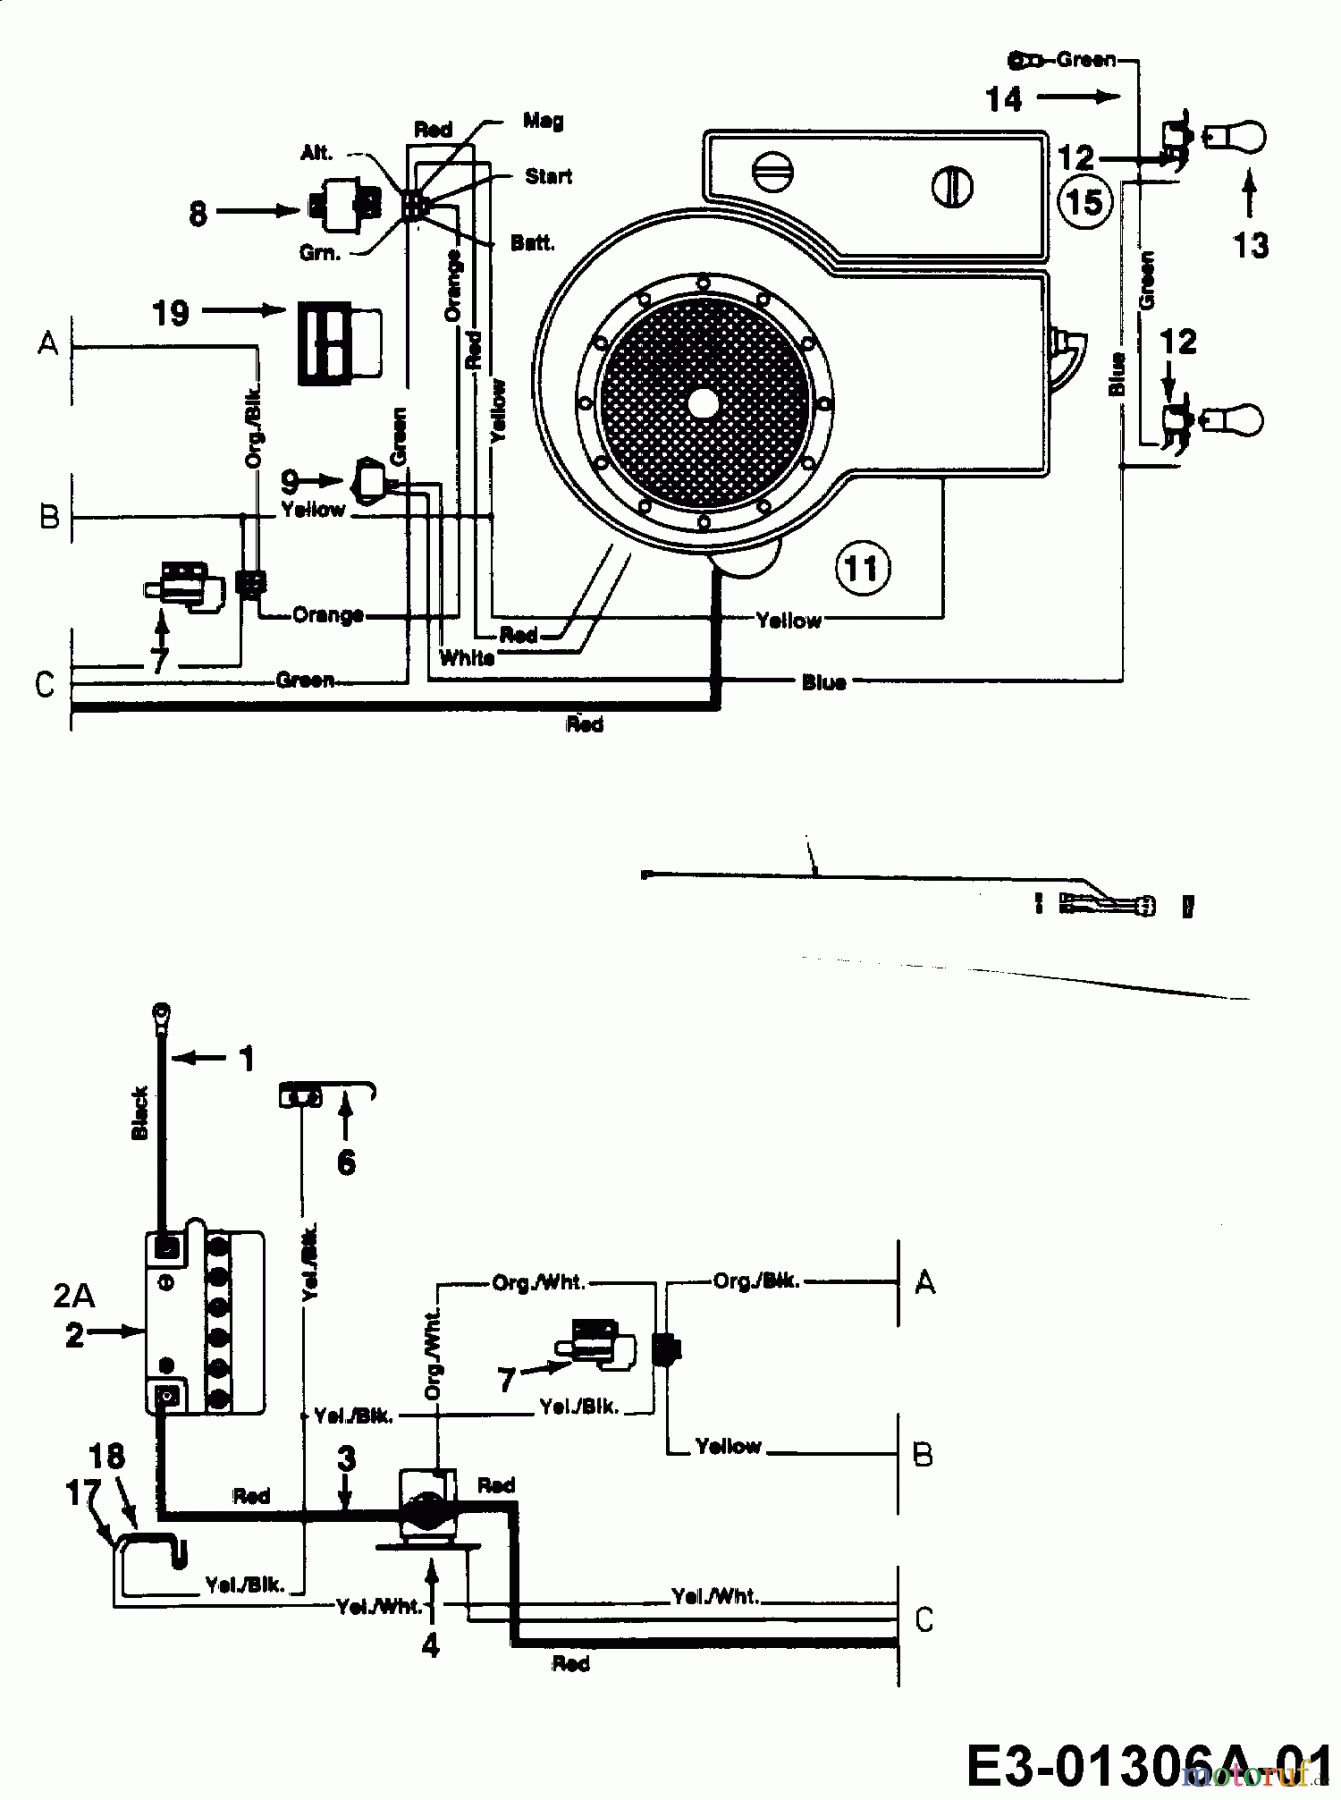  Mastercut Lawn tractors 125/76 13BL452C659  (1998) Wiring diagram single cylinder